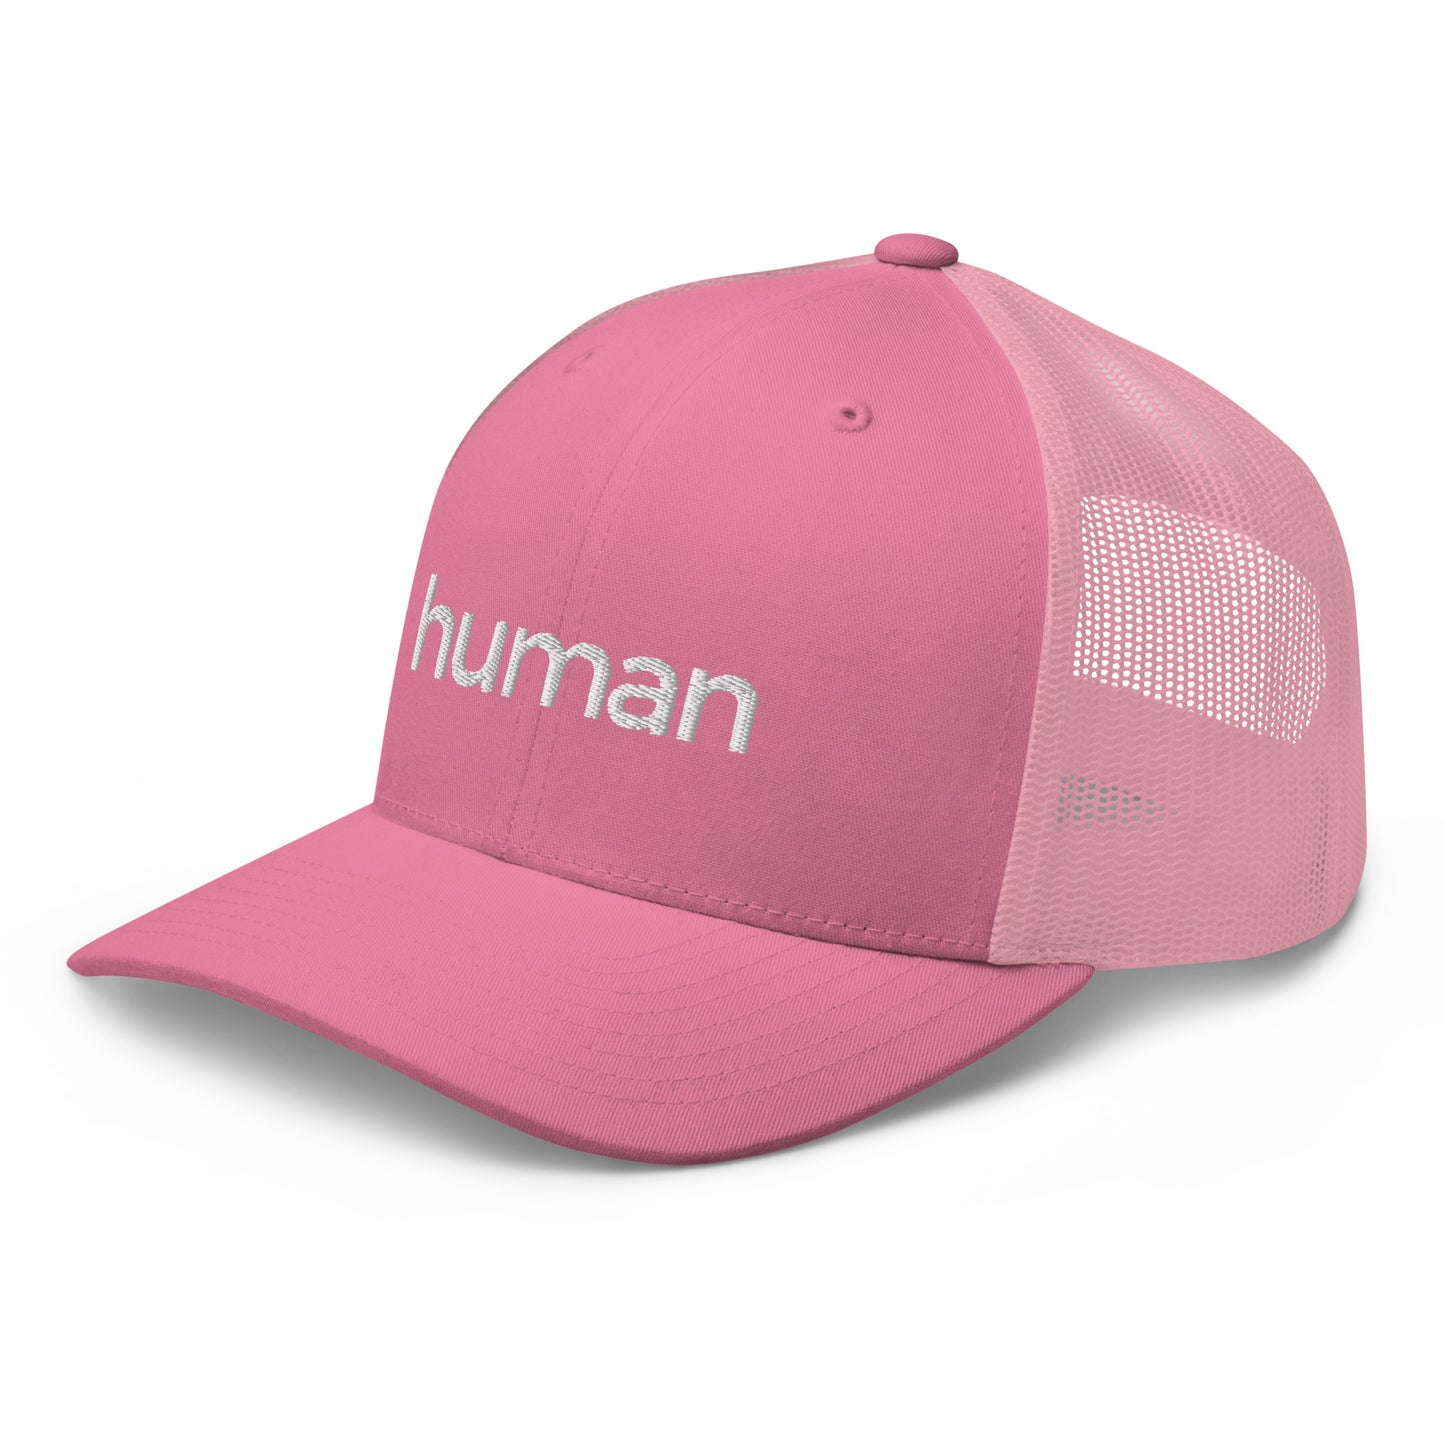 Human - Trucker Cap